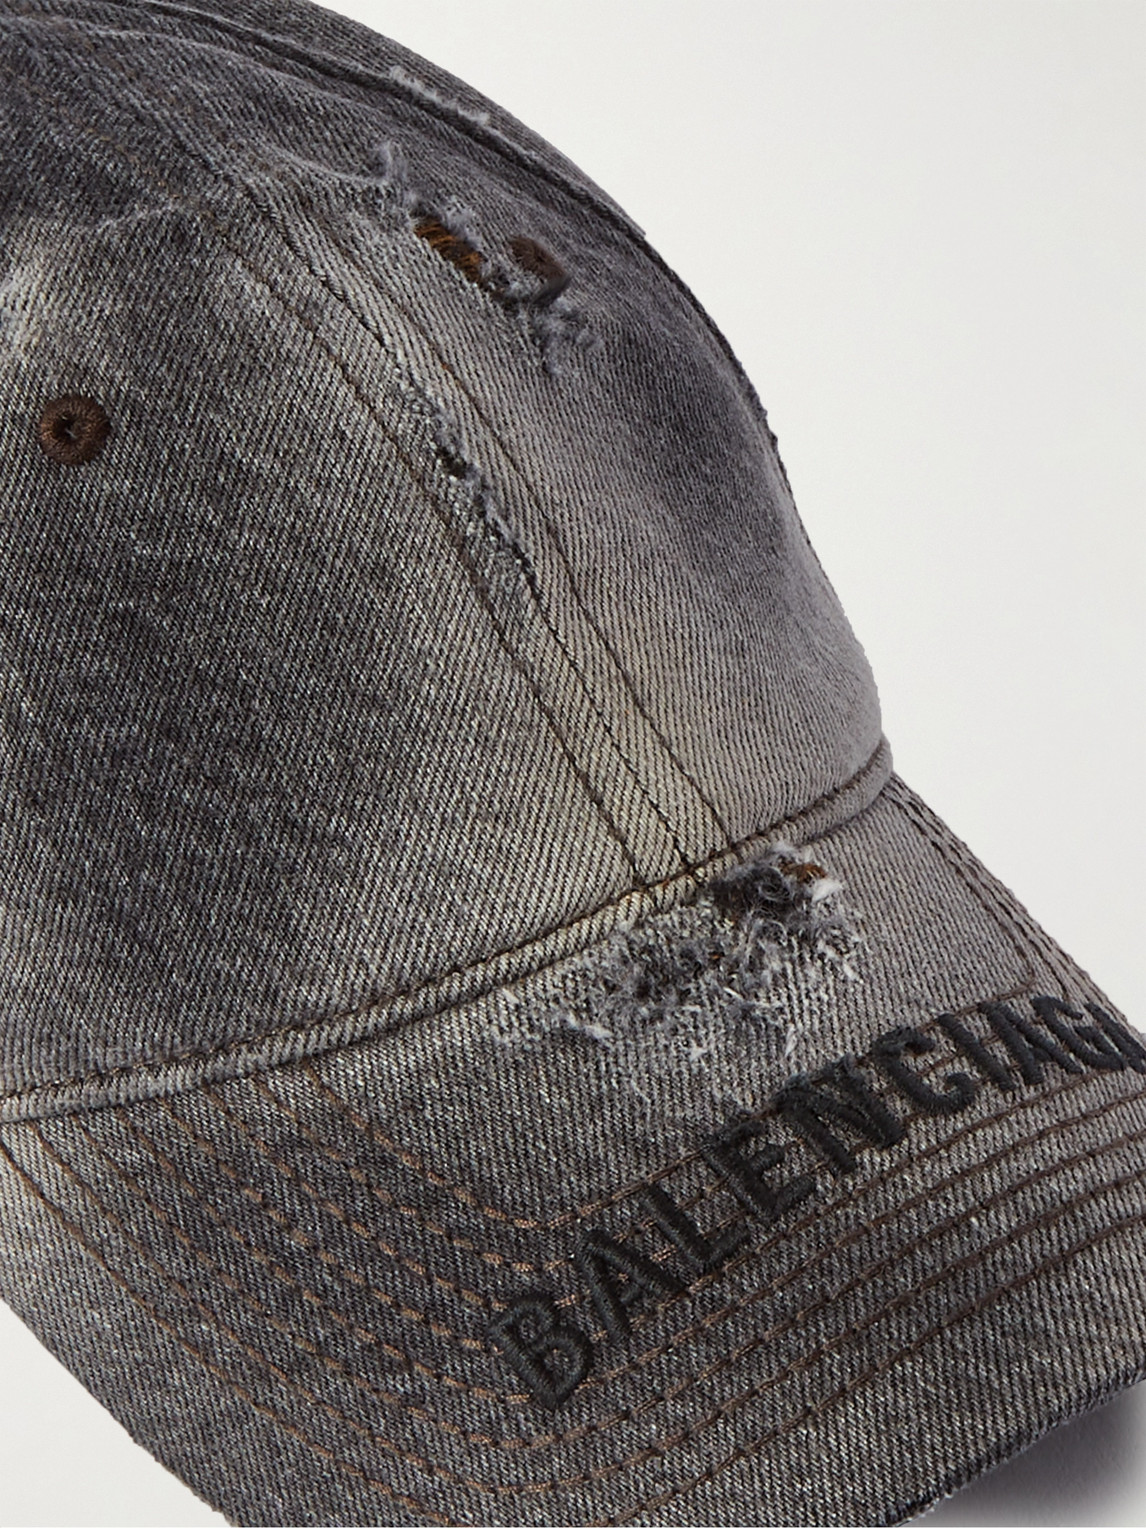 L.V. patch distressed black hat – jenniferandalancustomdesigns